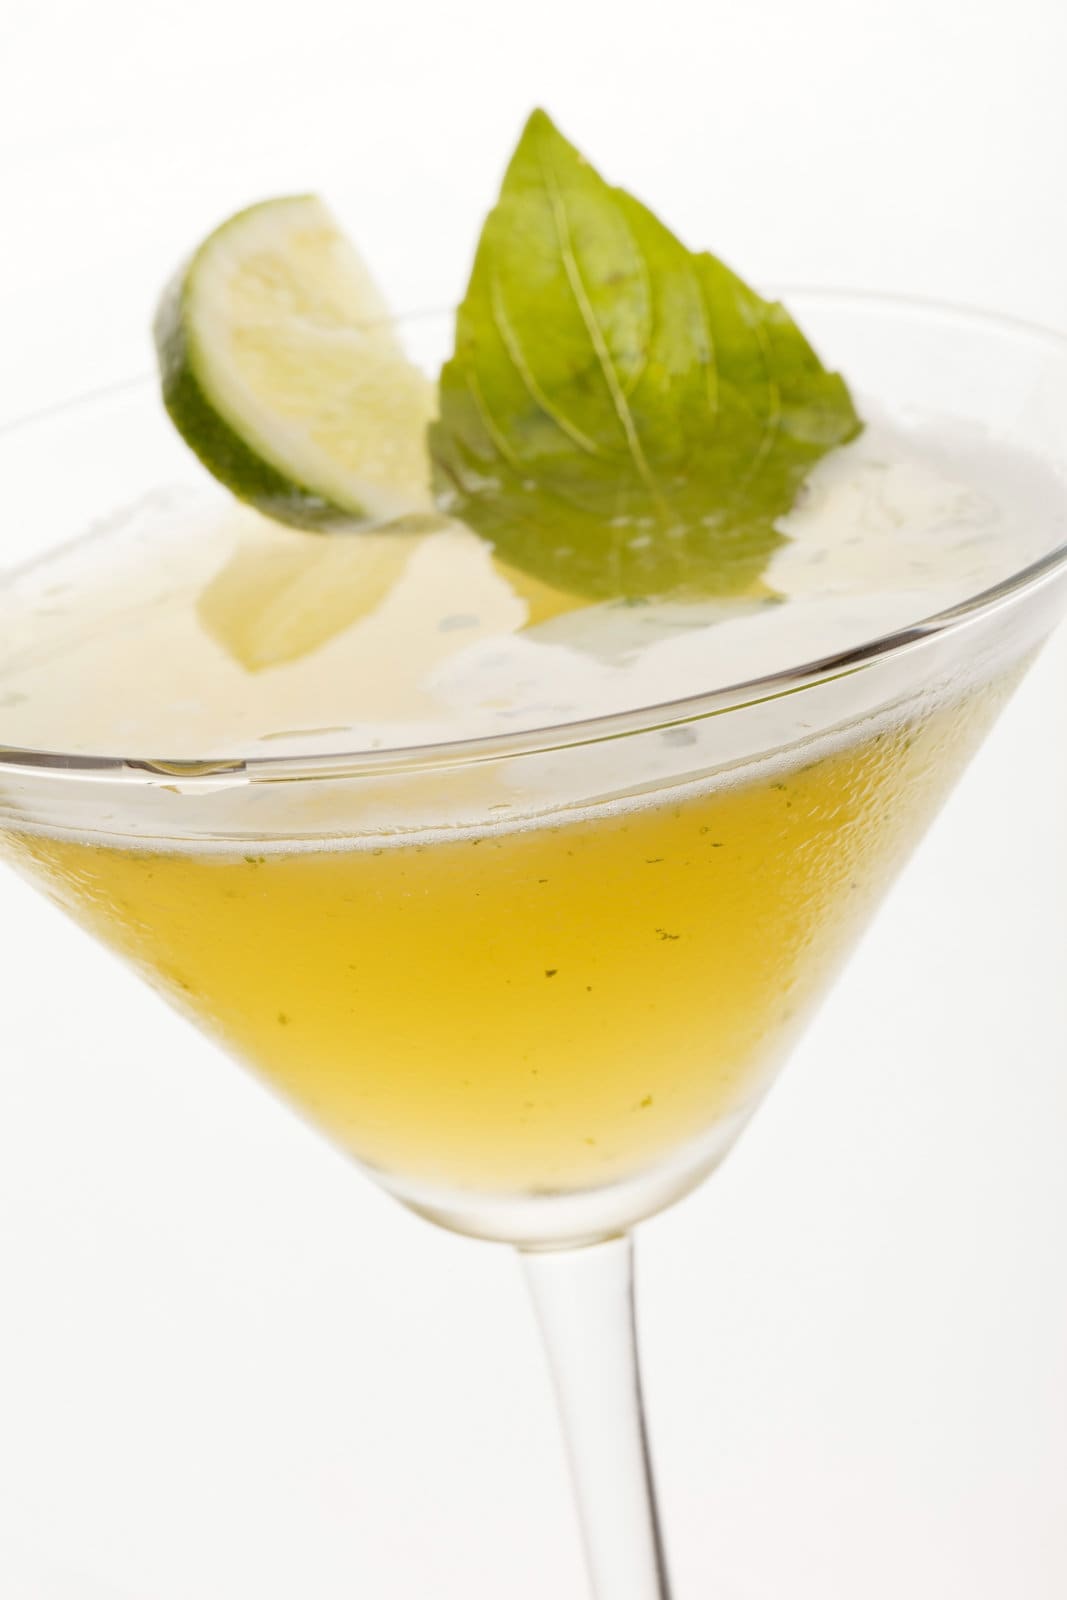 Gimlet (Gin) cocktail